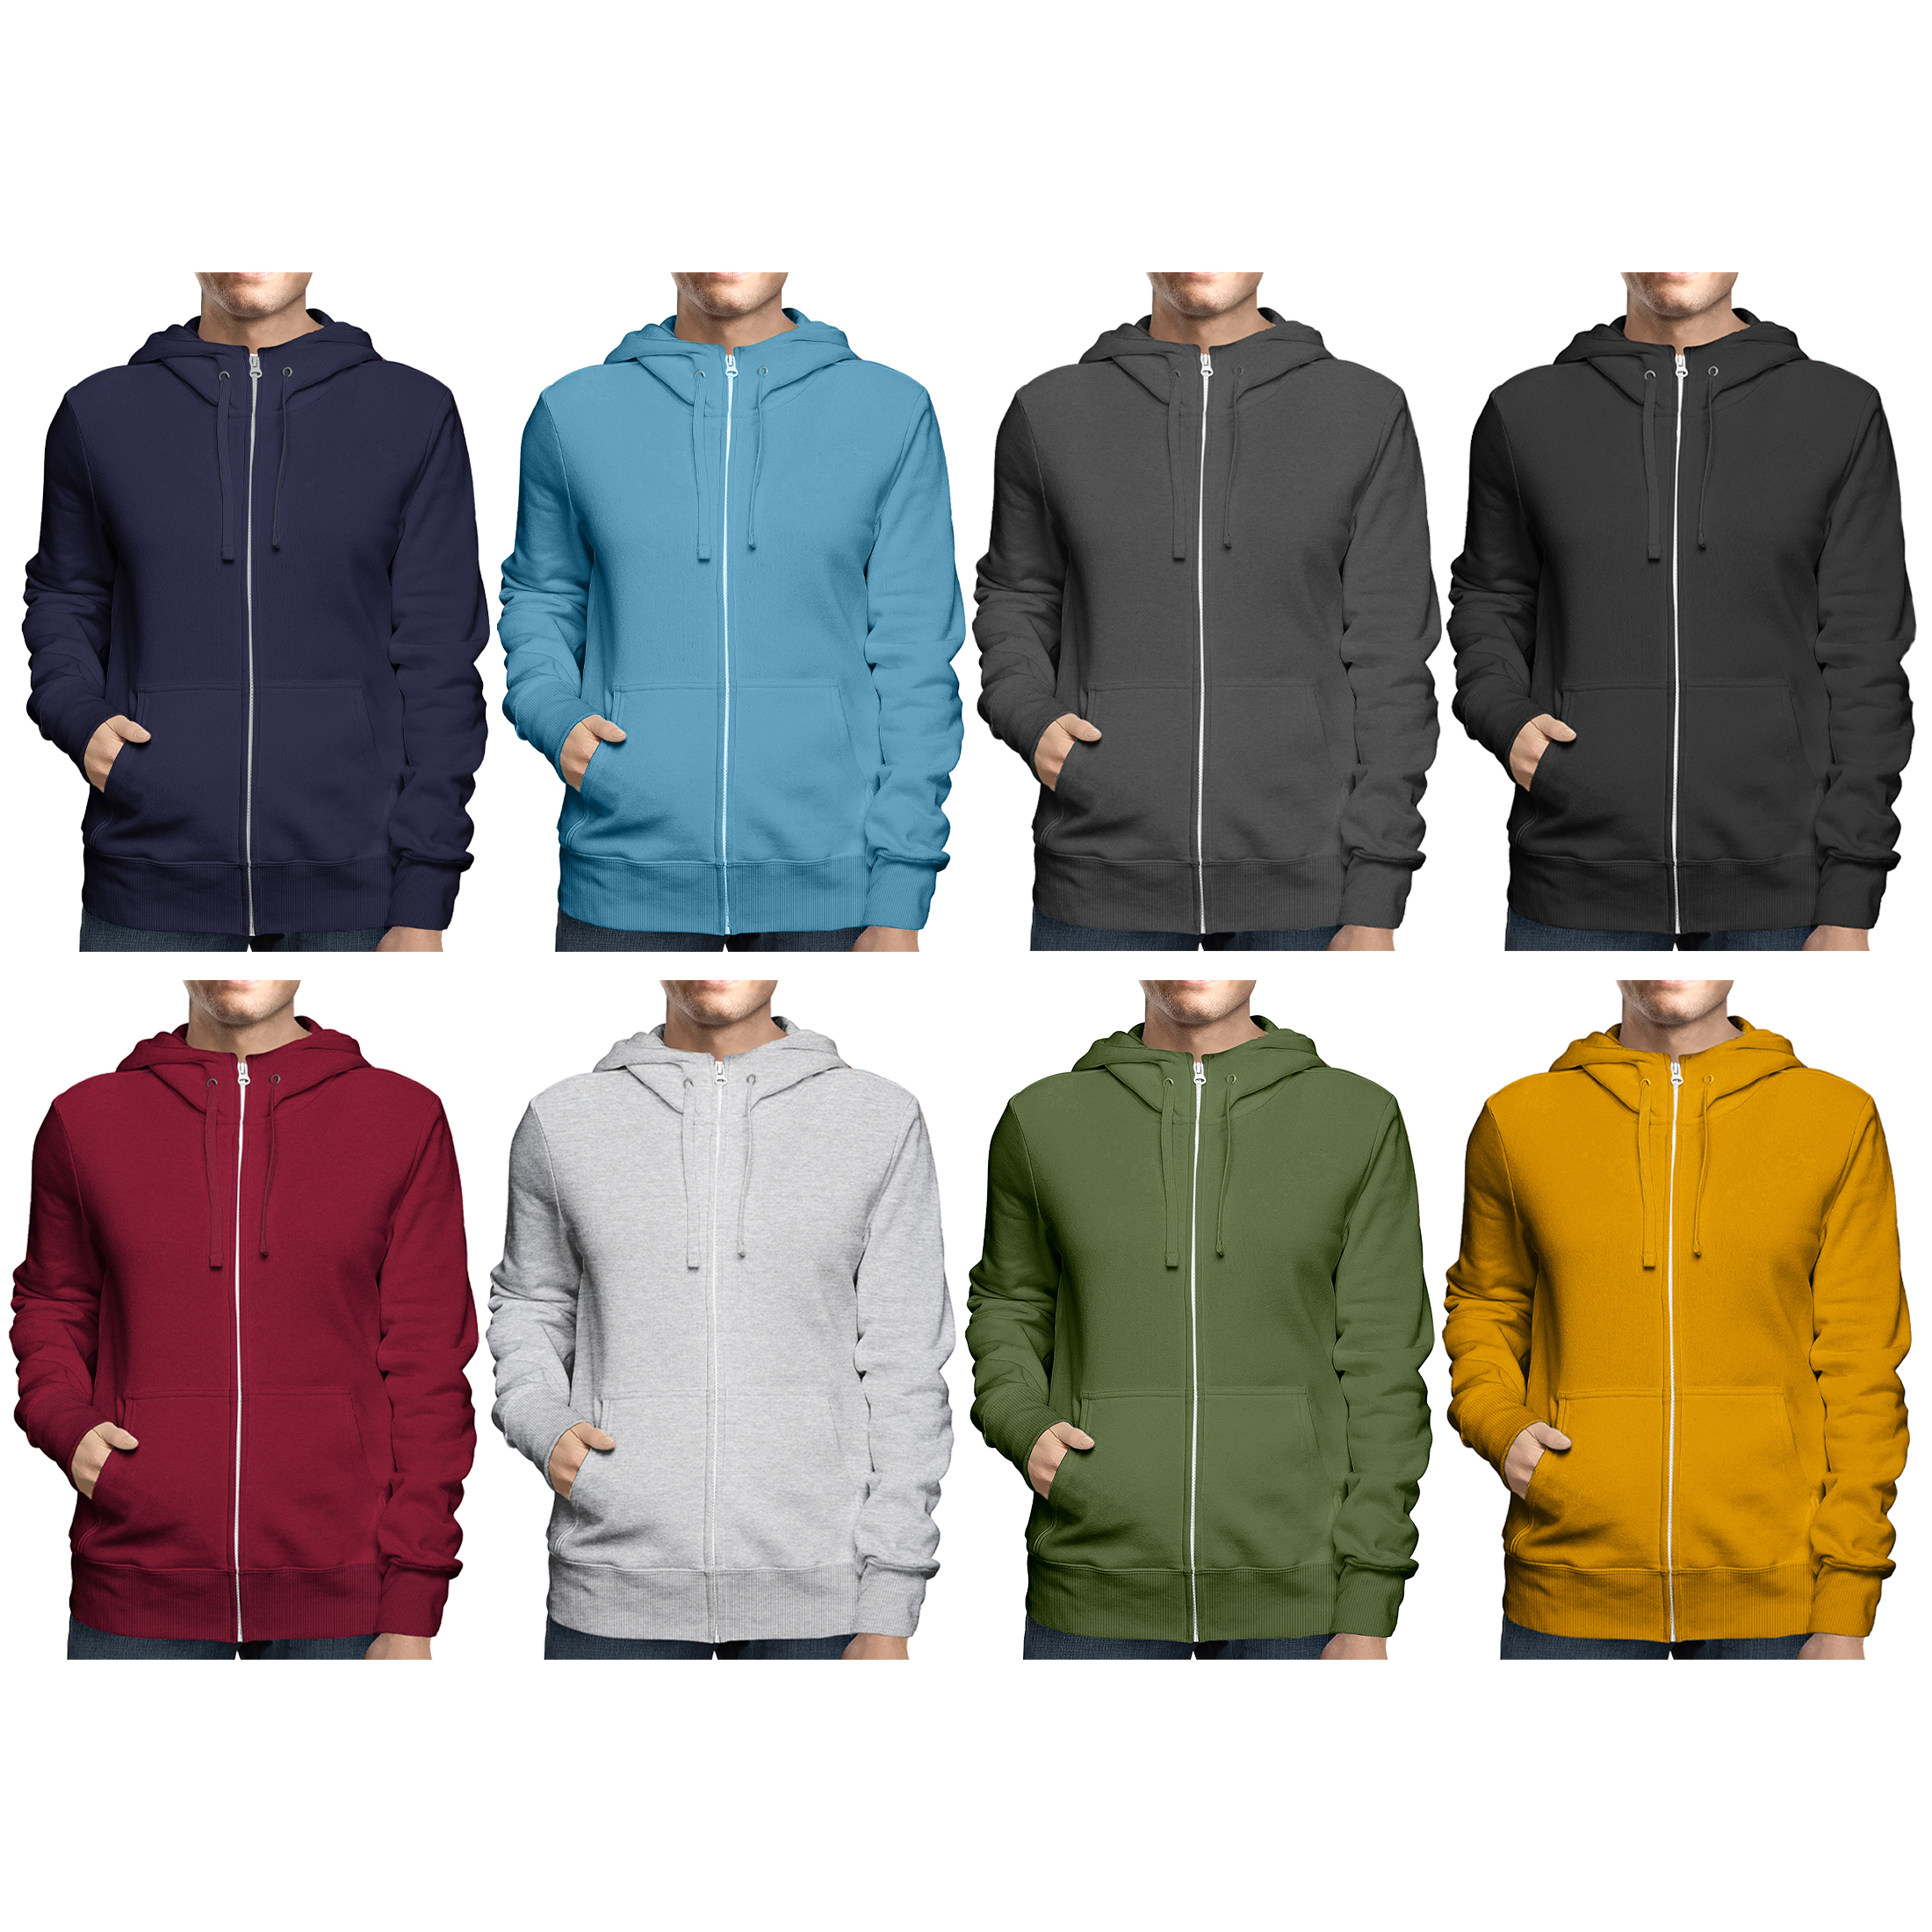 2-Pack: Men's Full Zip Up Fleece-Lined Hoodie Sweatshirt (Big & Tall Size Available) - Navy & Black, Medium